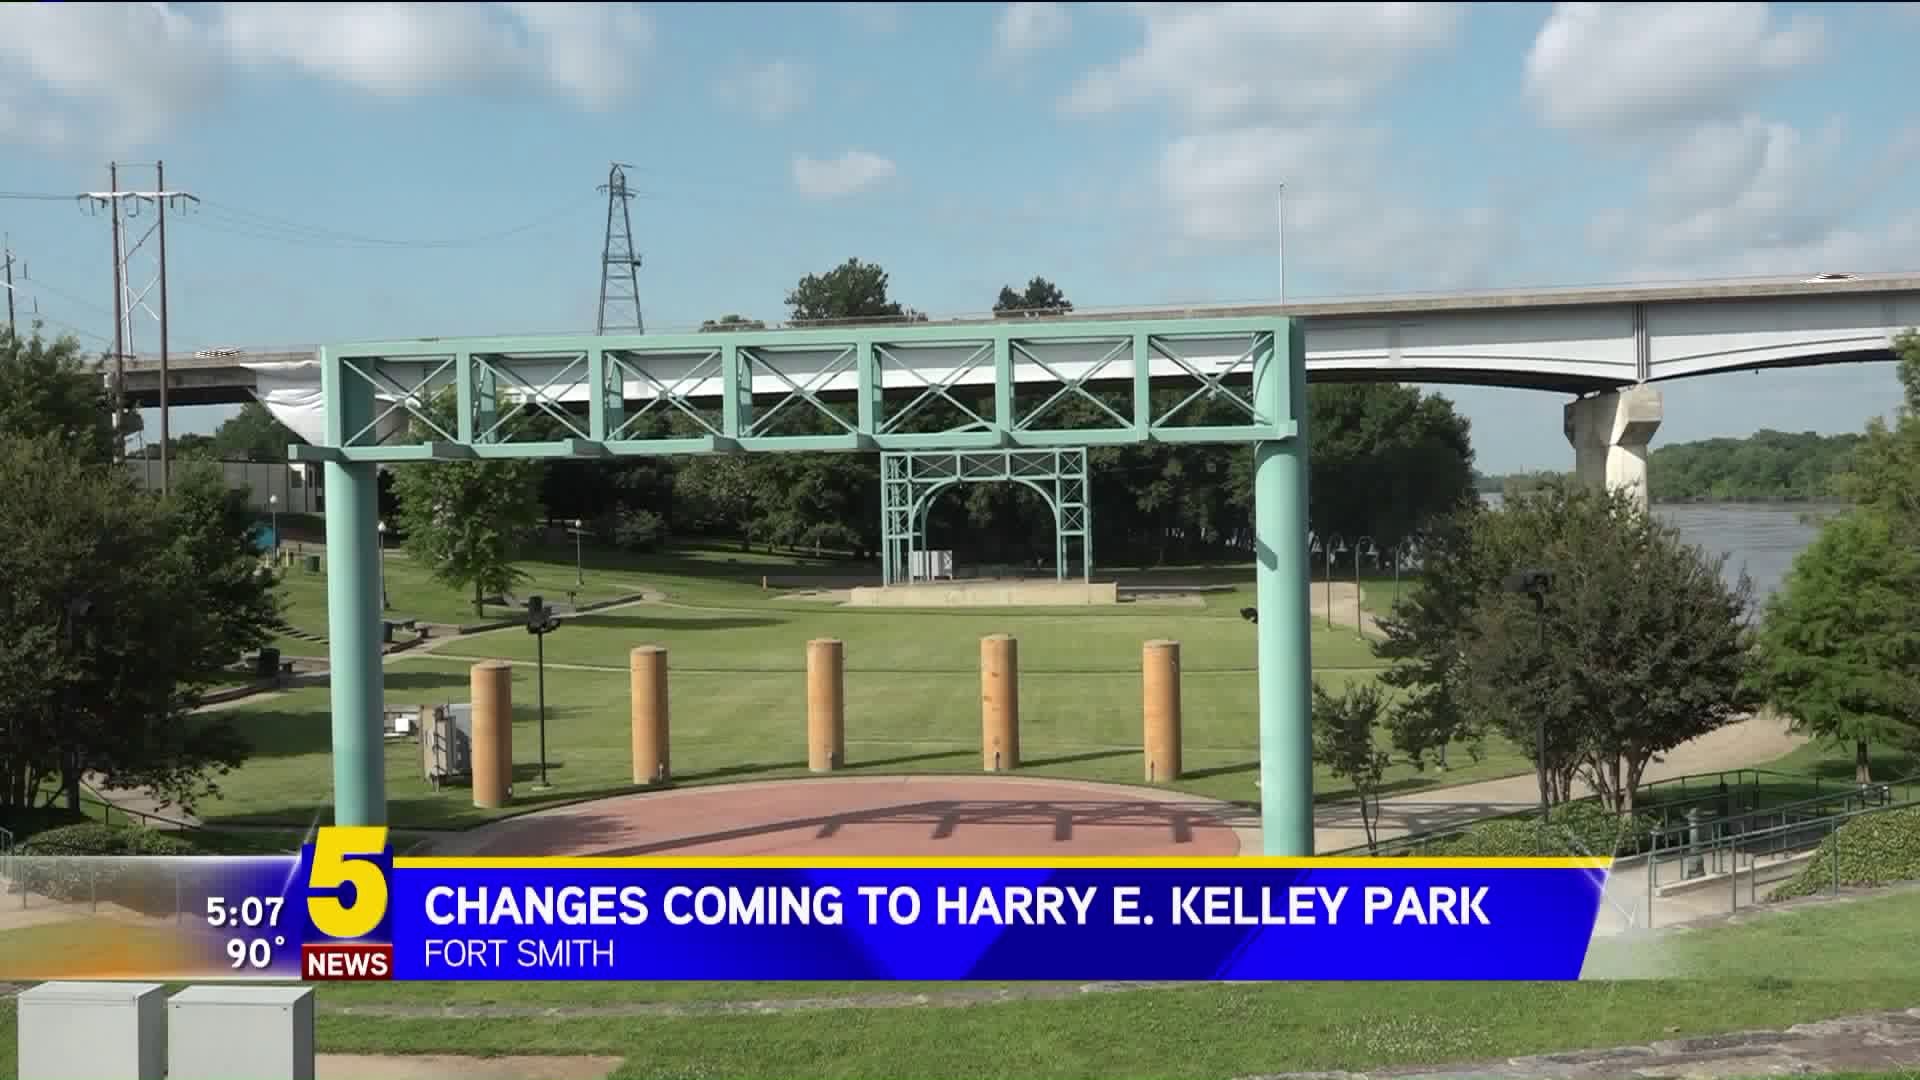 Fort Smith City Directors Discuss Entertainment Changes to Harry E. Kelley Park